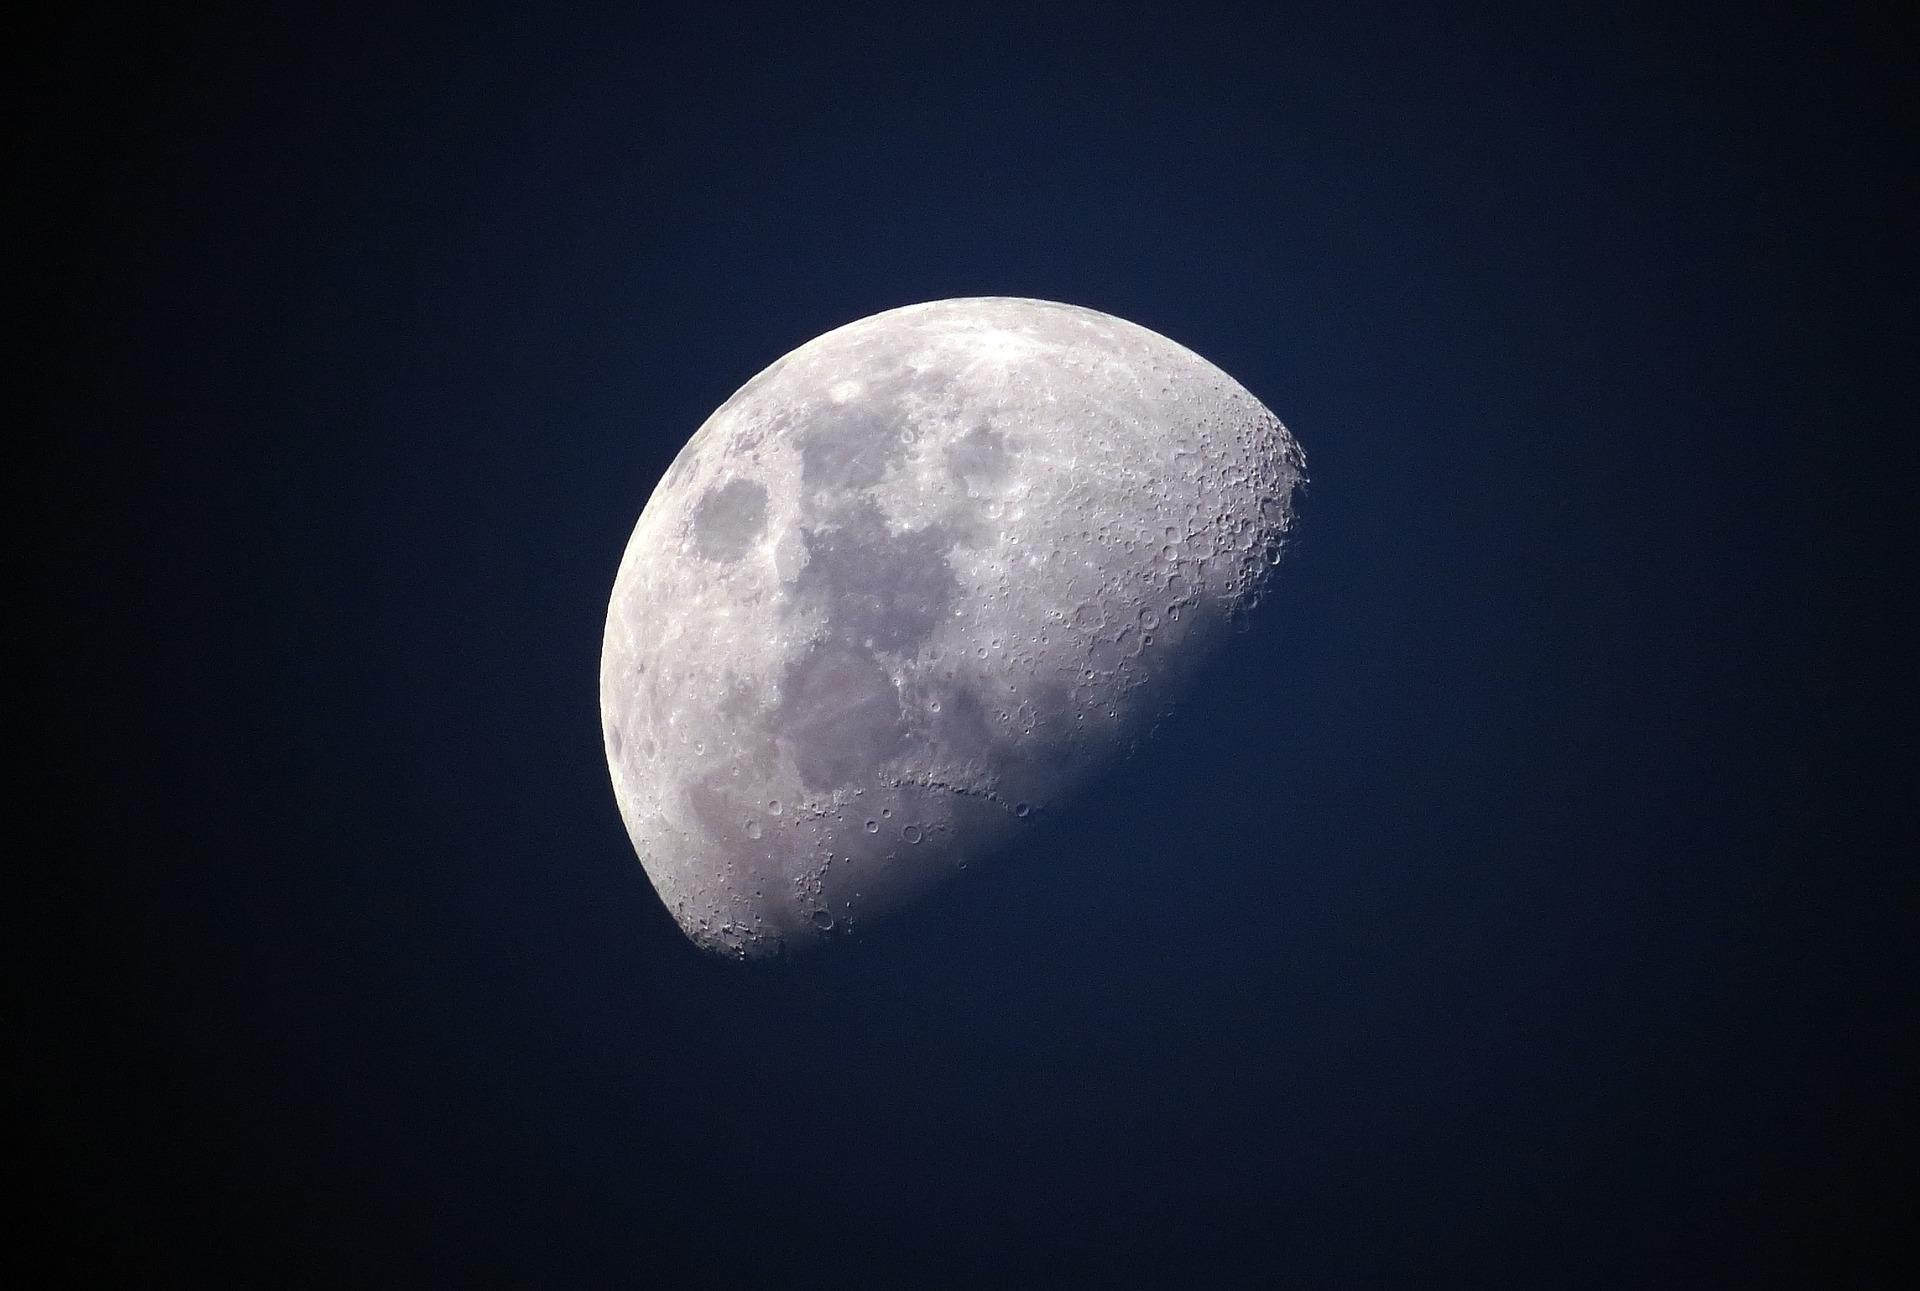 Mond fotografieren - mittels Teleobjektiv, 